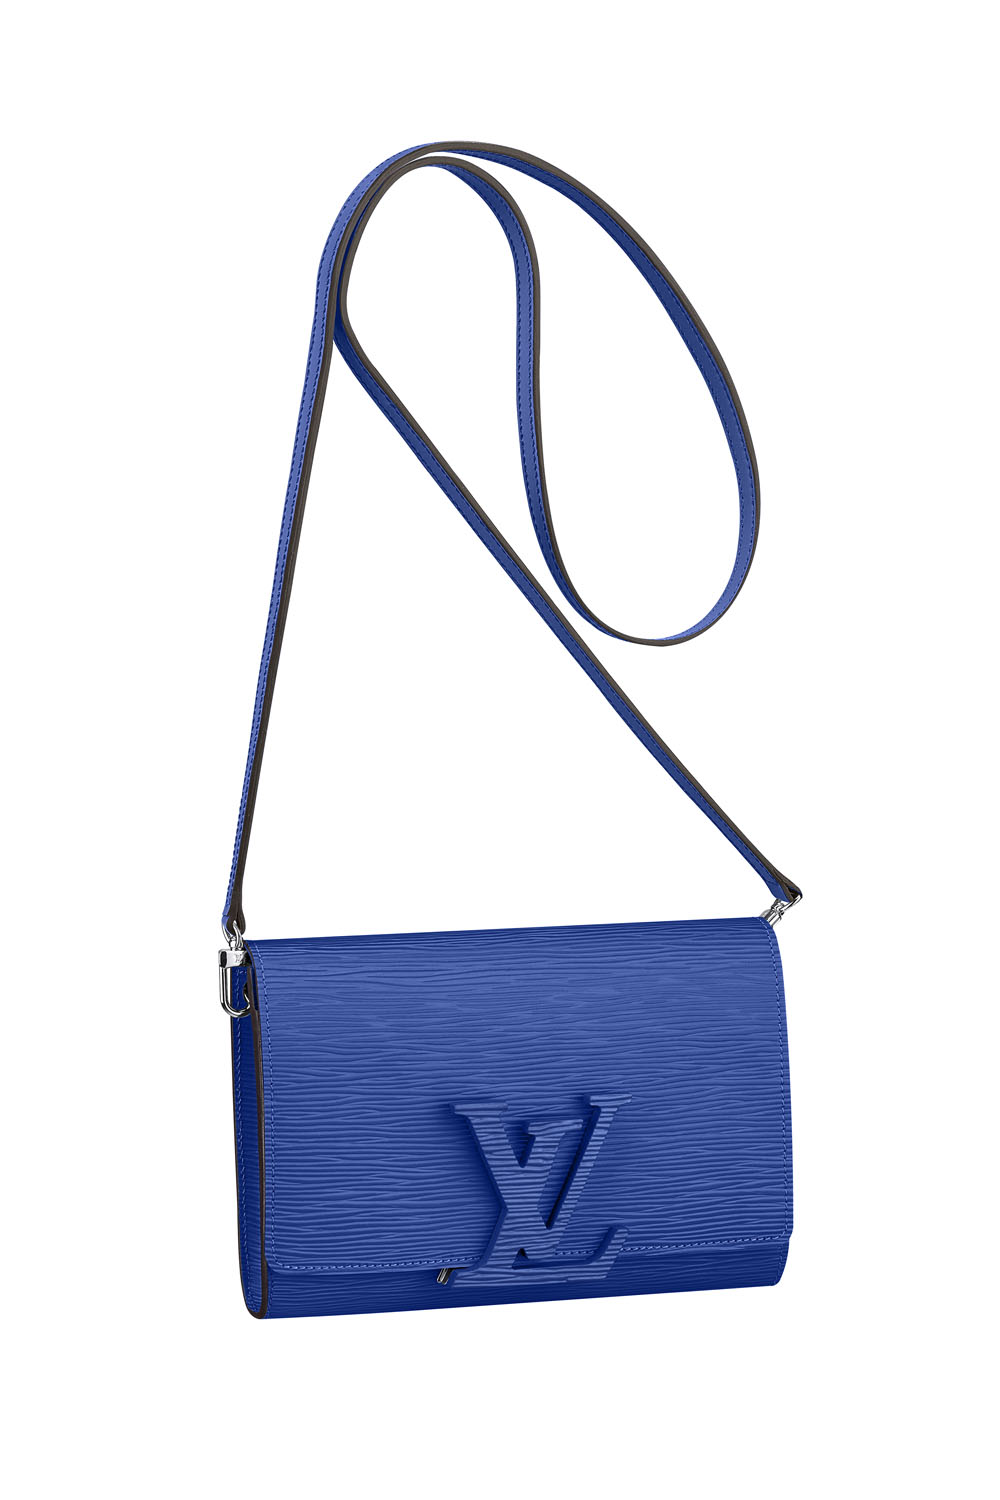 Bag, $3,050, by Louis Vuitton.